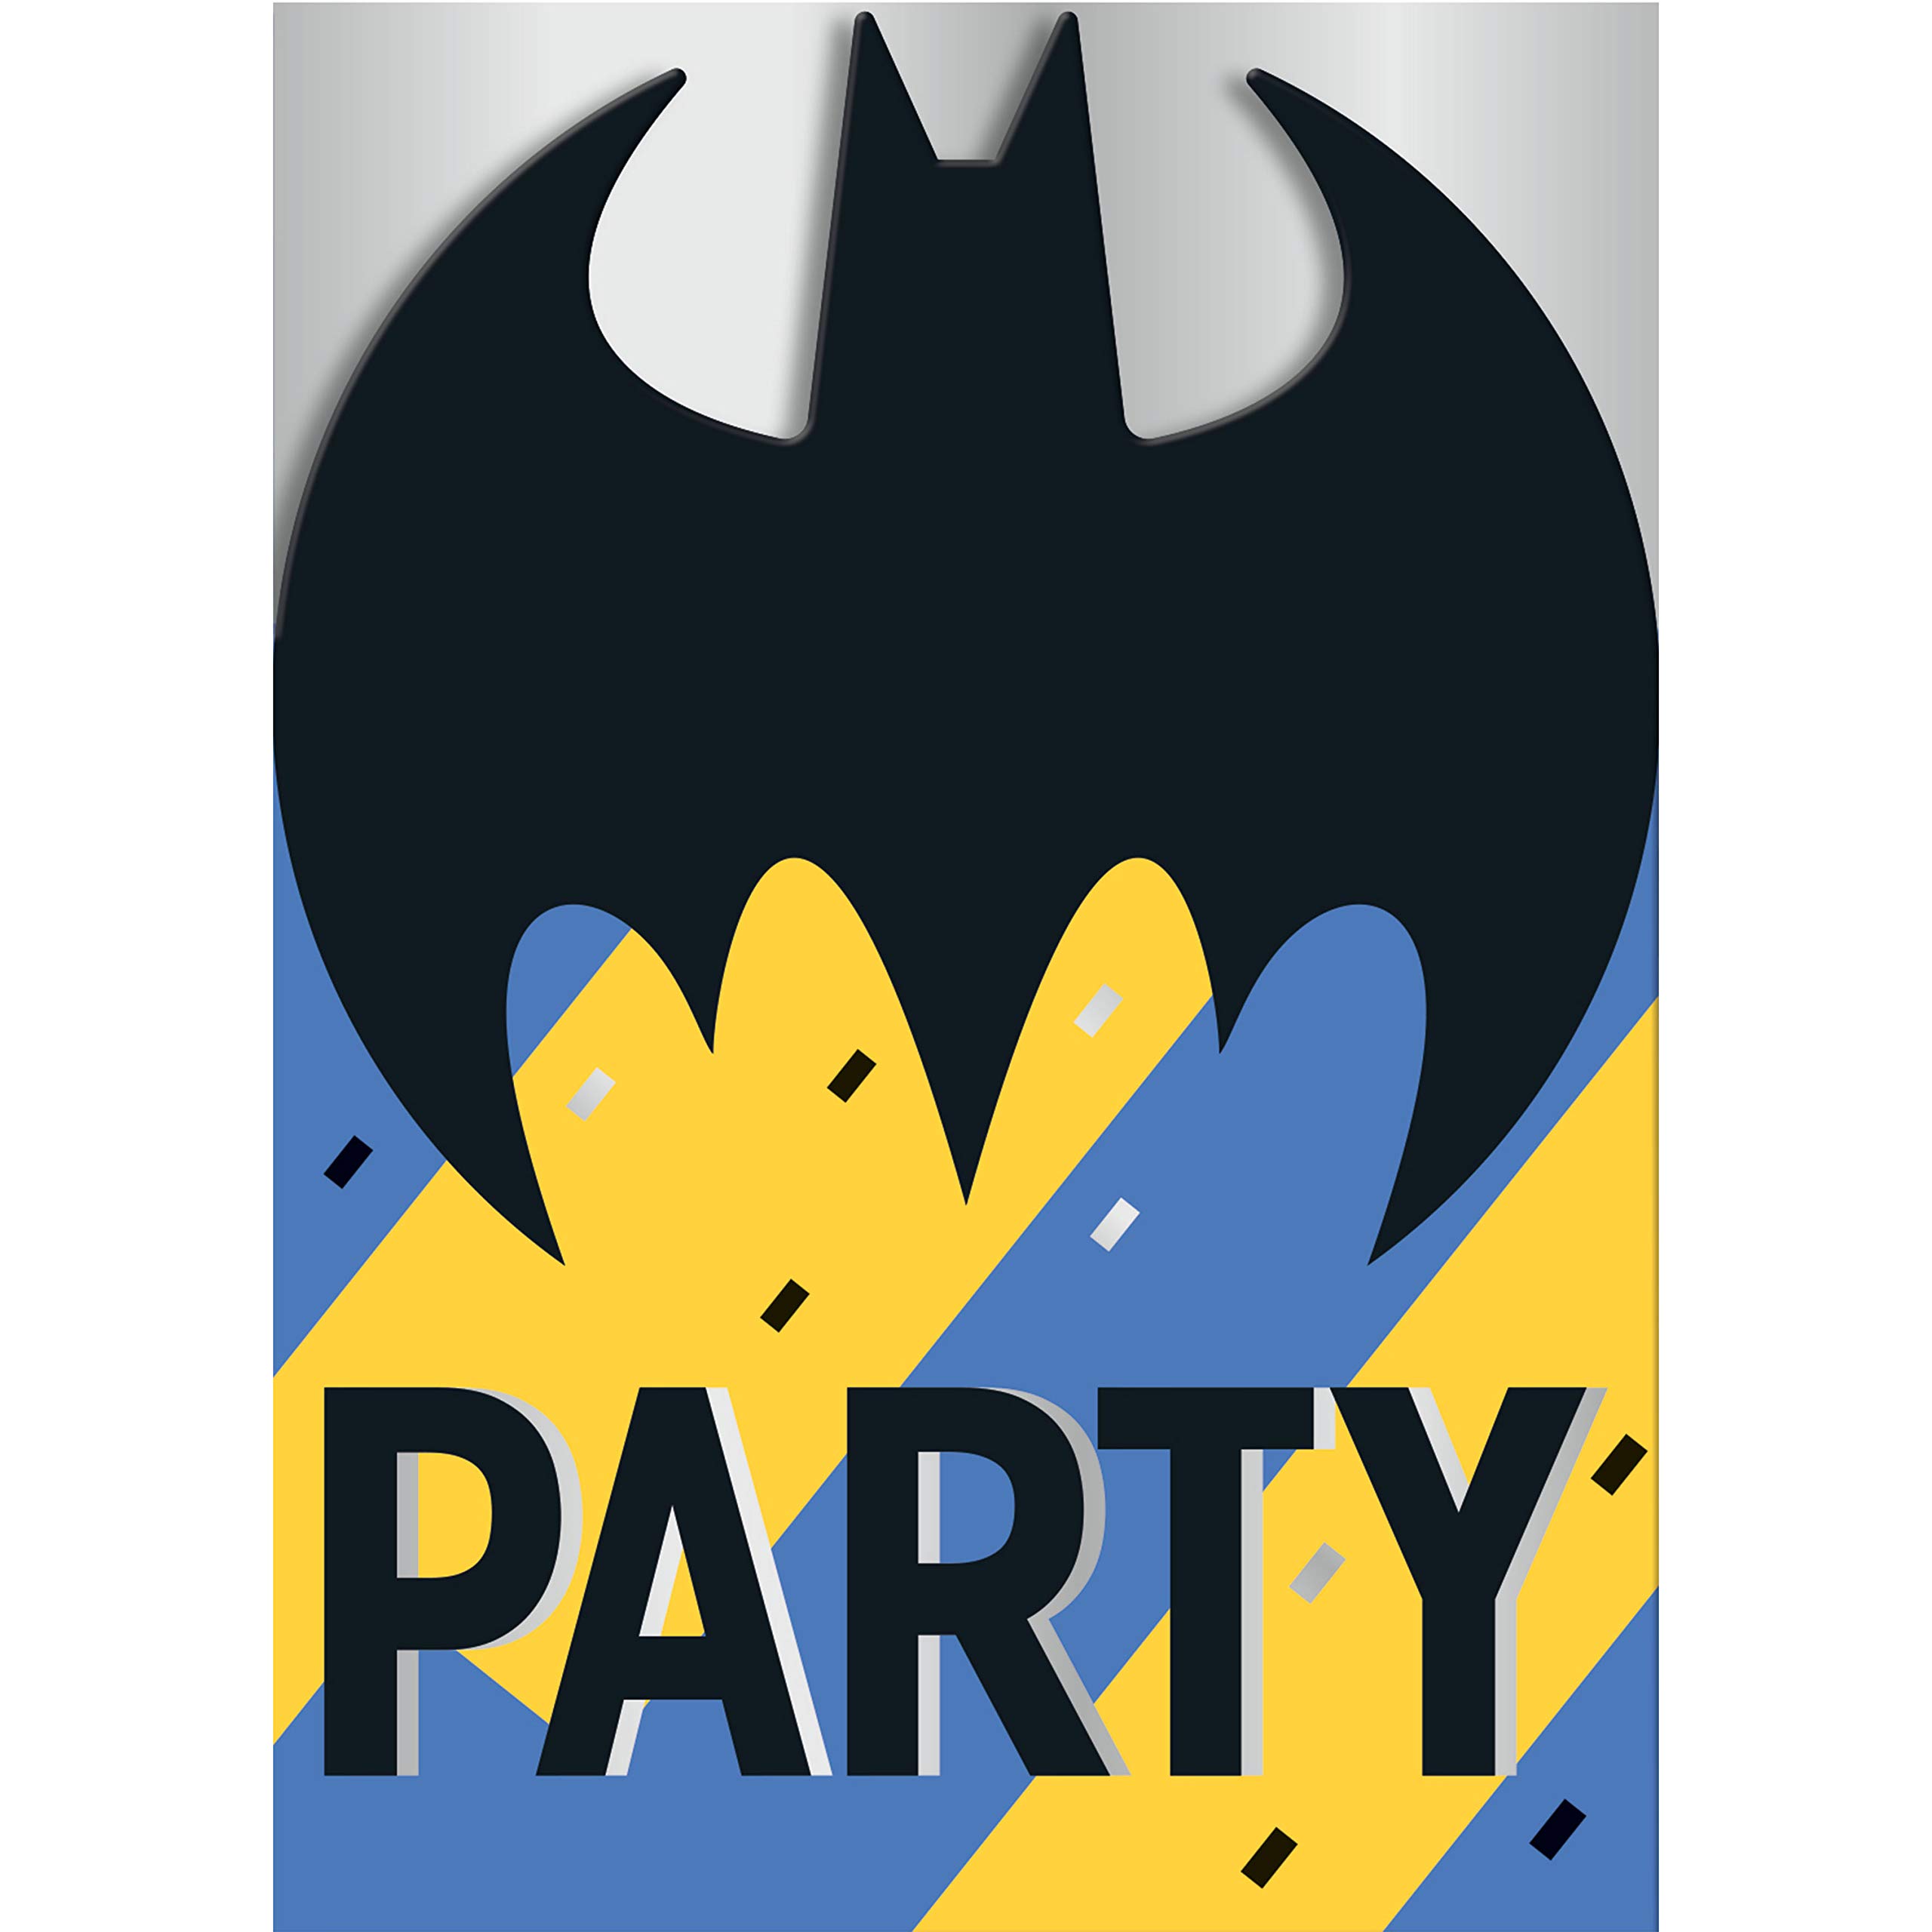 Batman Multicolor Invitations (Pack of 8) - Fun Design Paper Invites for Kids Birthdays & Parties